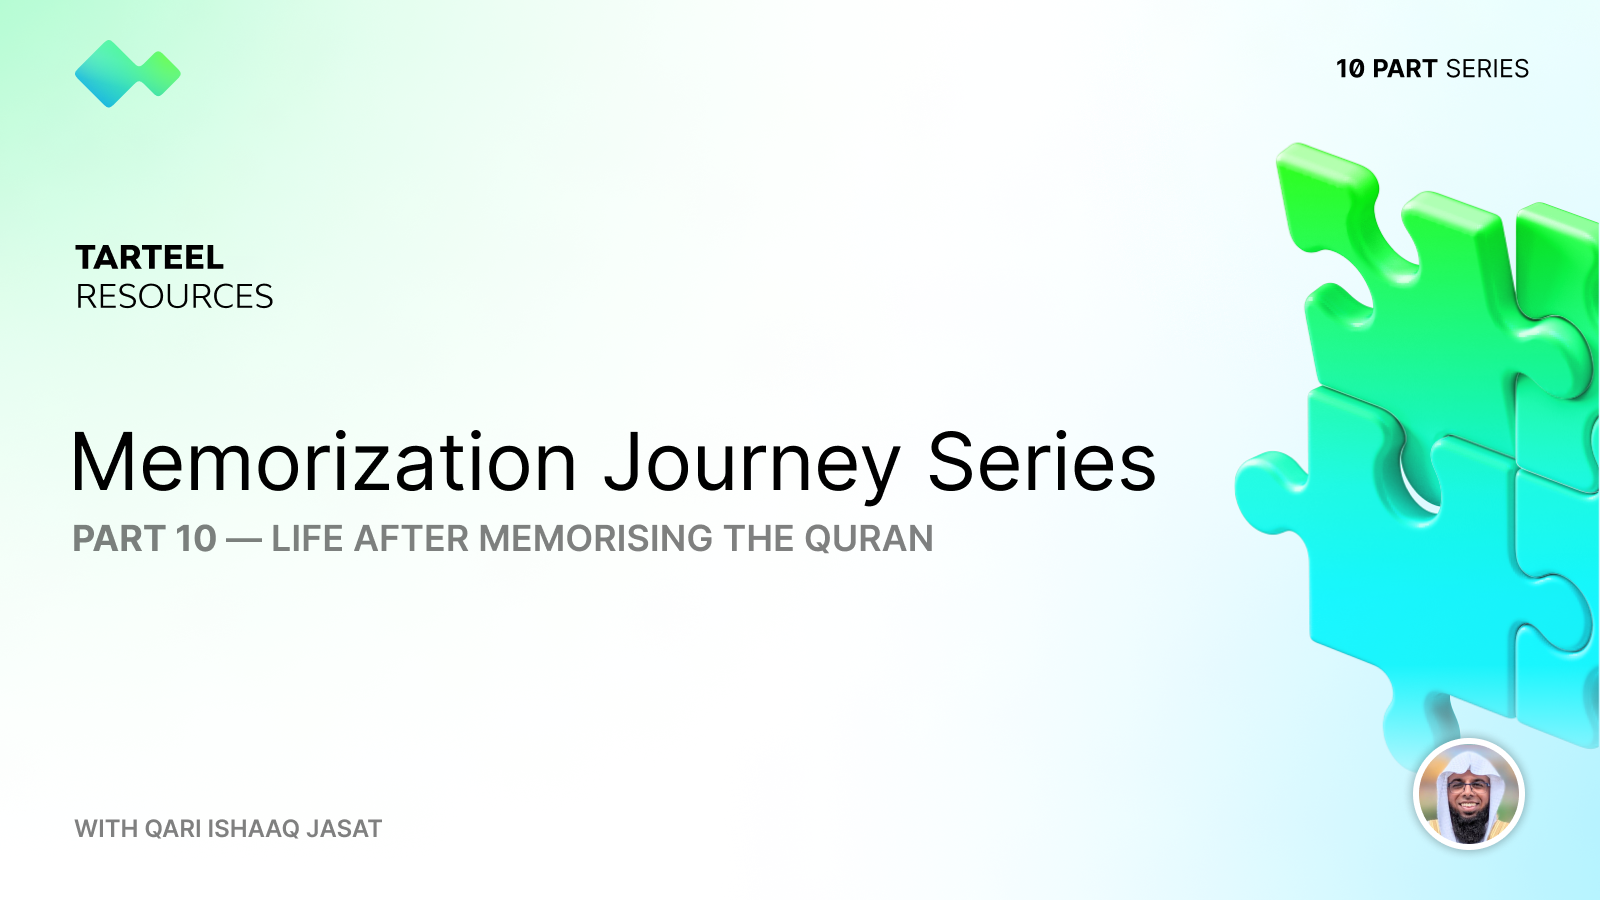 Quran Memorization Journey Tips — Life after memorizing the Qur'an